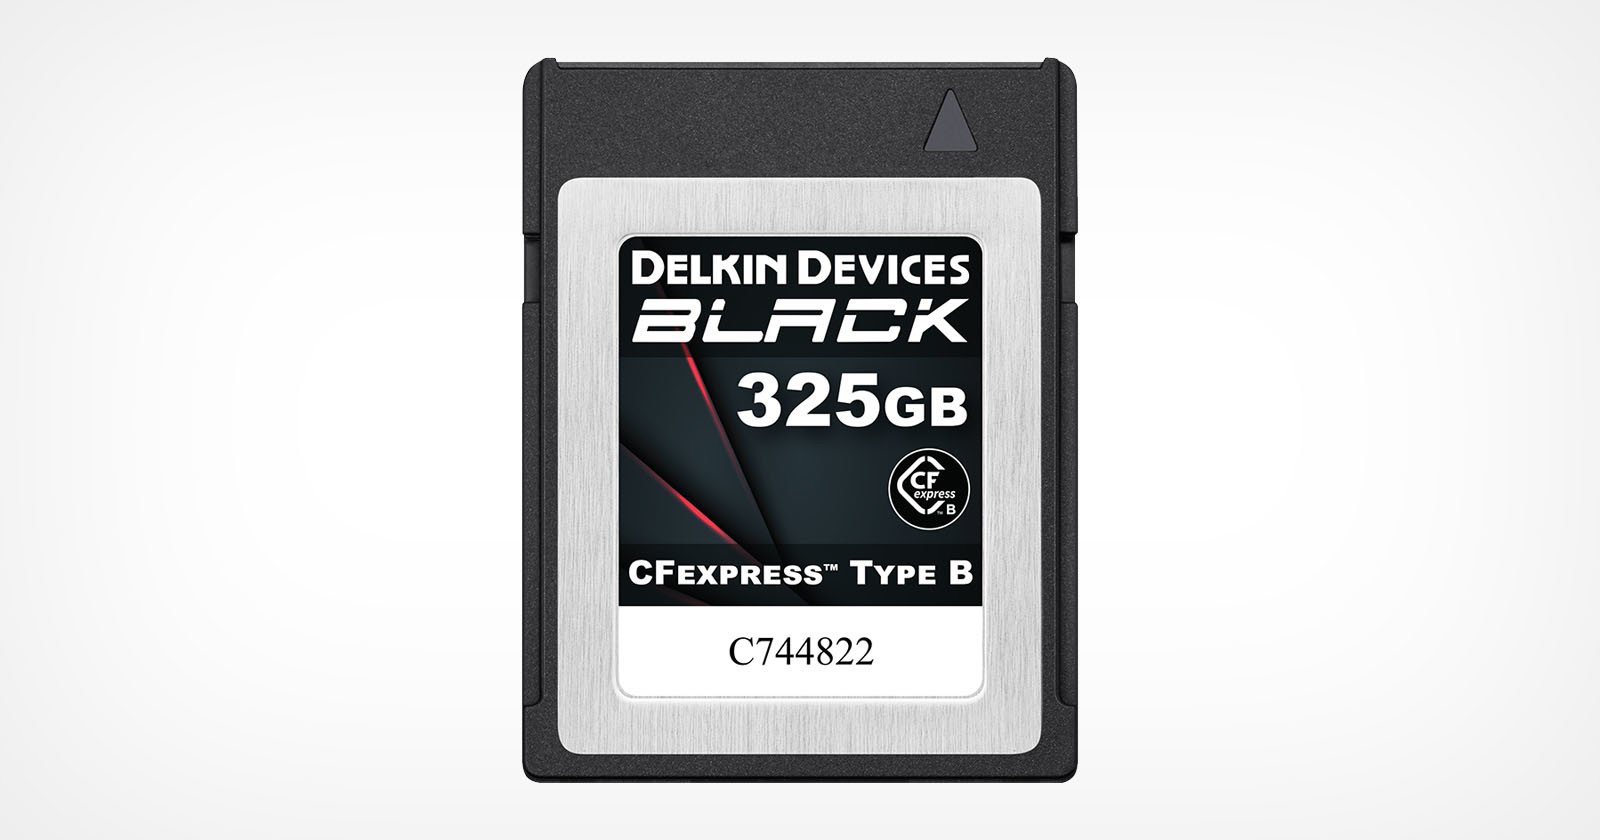  delkin black series cfexpress cards make lofty speed 